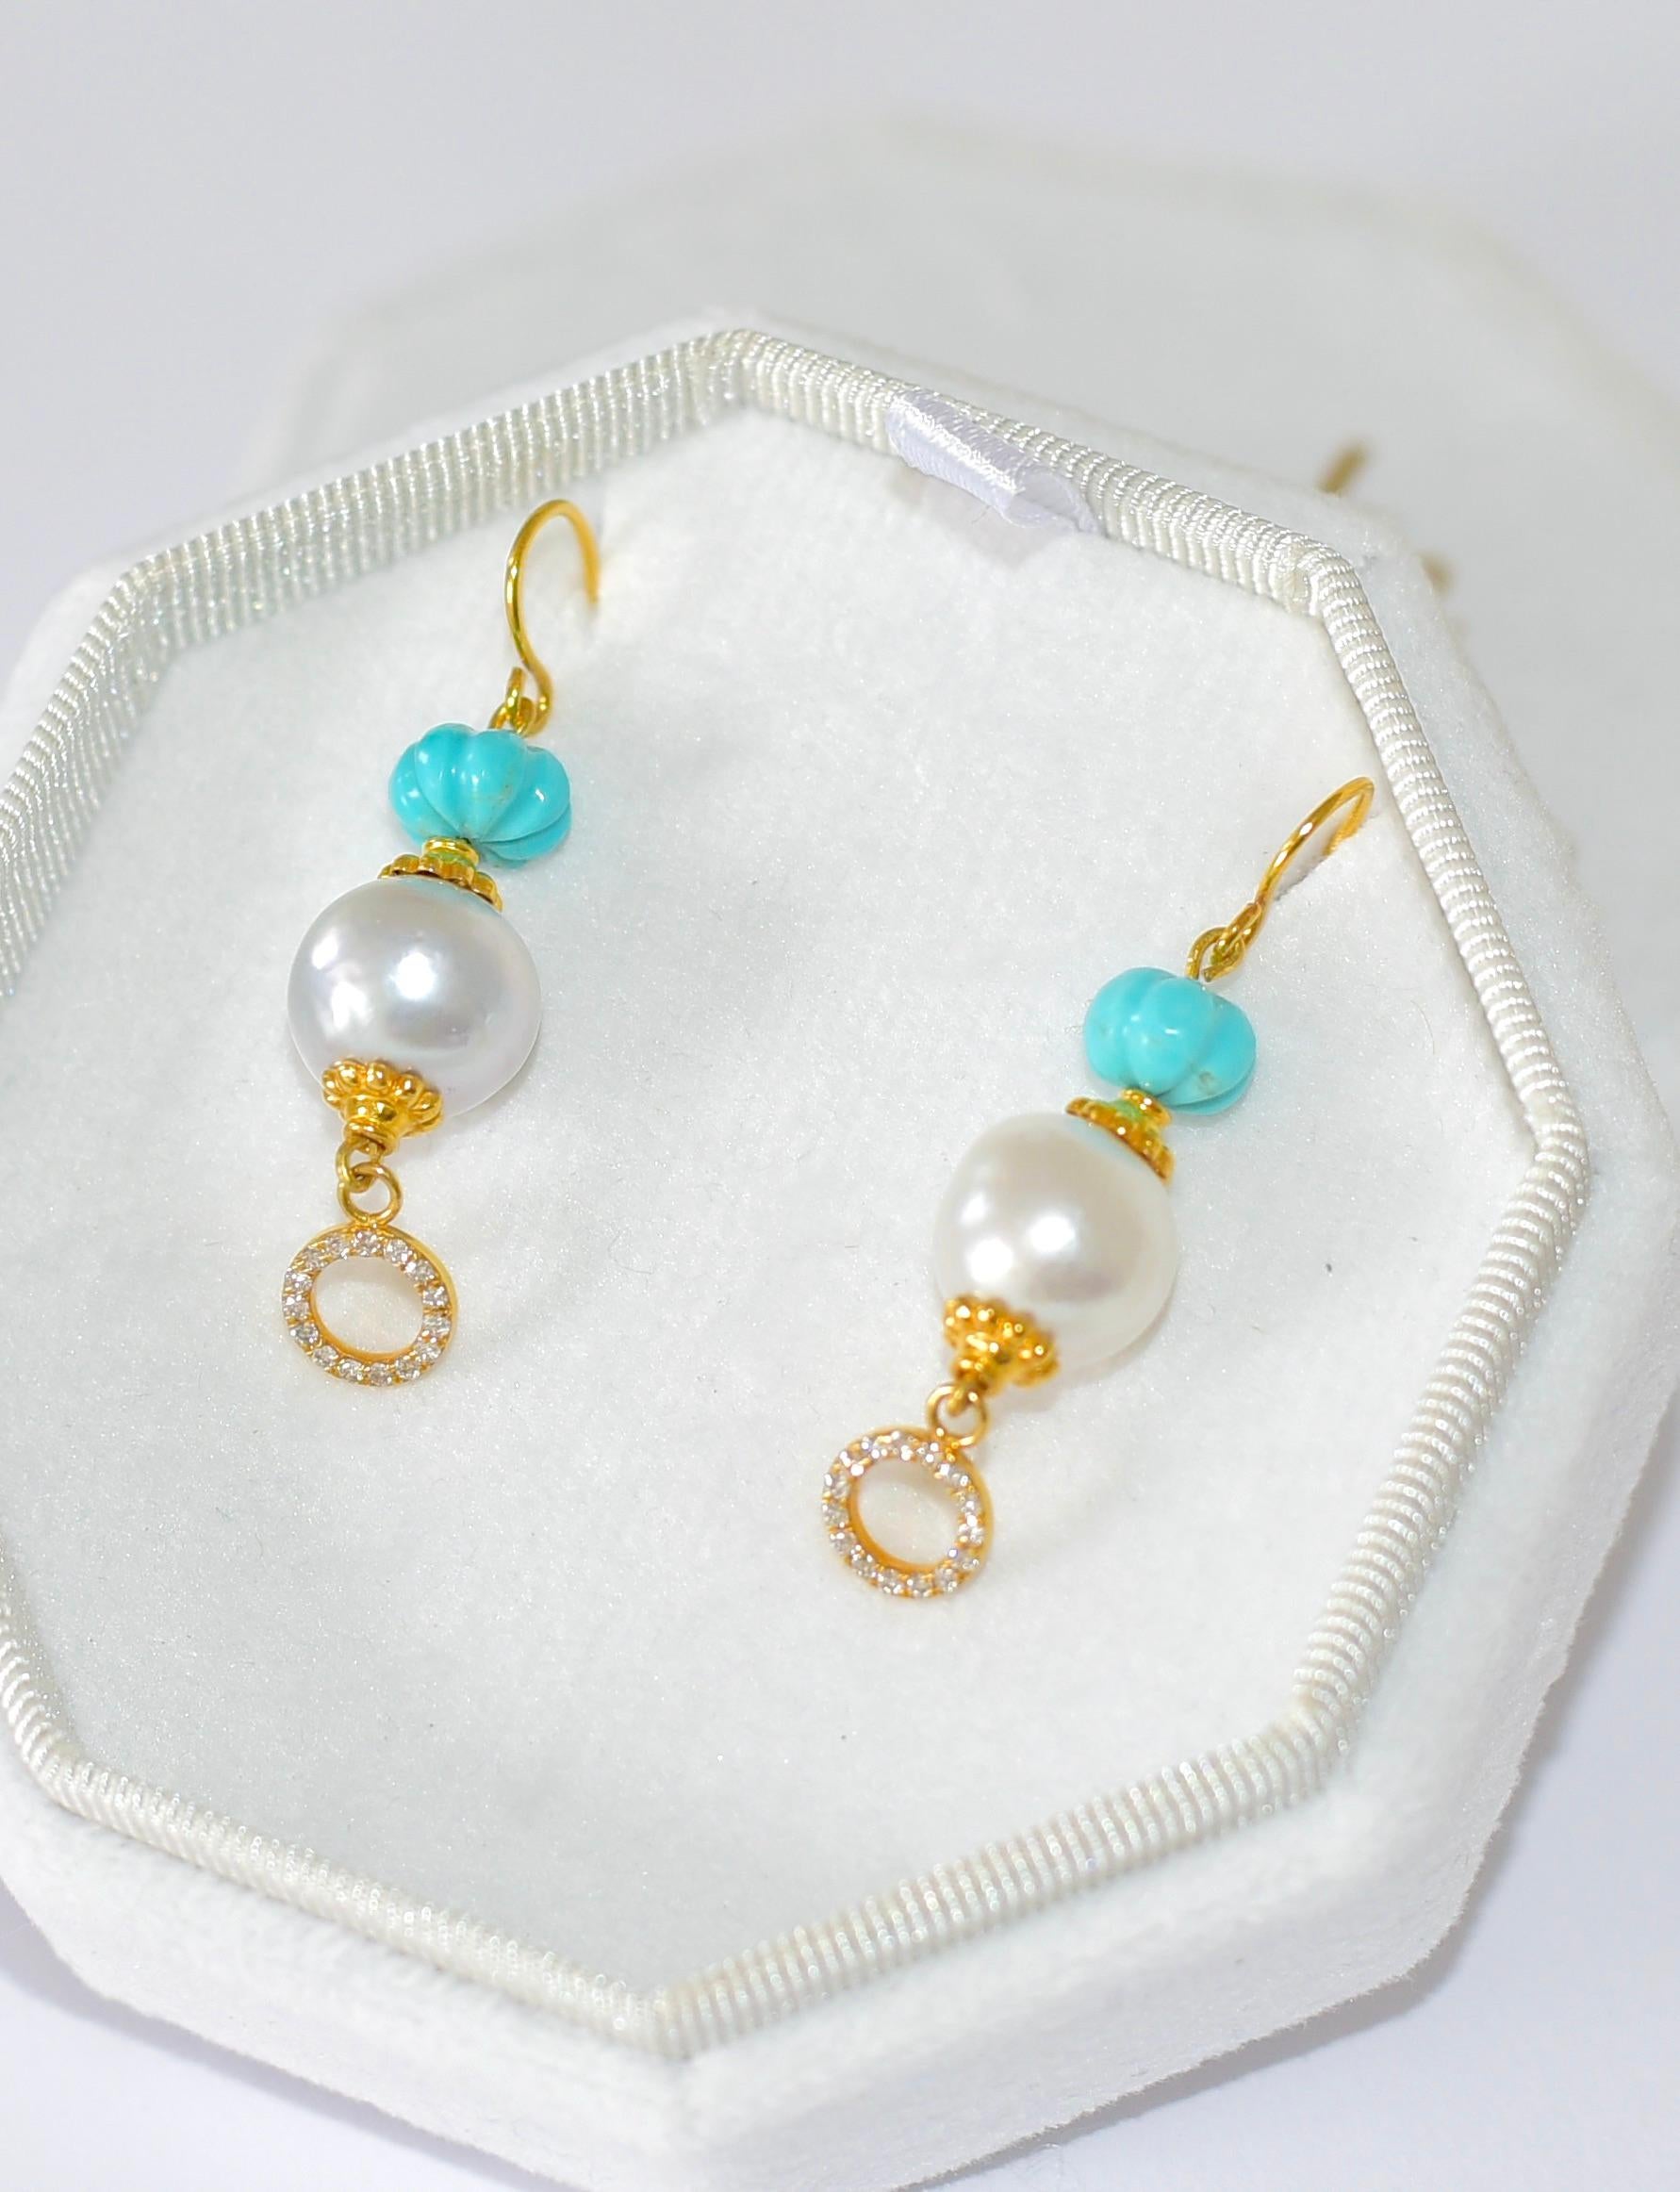 Bead Kingman Turquoise, South Sea Pearl Earrings in 18K/14k Solid Gold, Diamonds. 